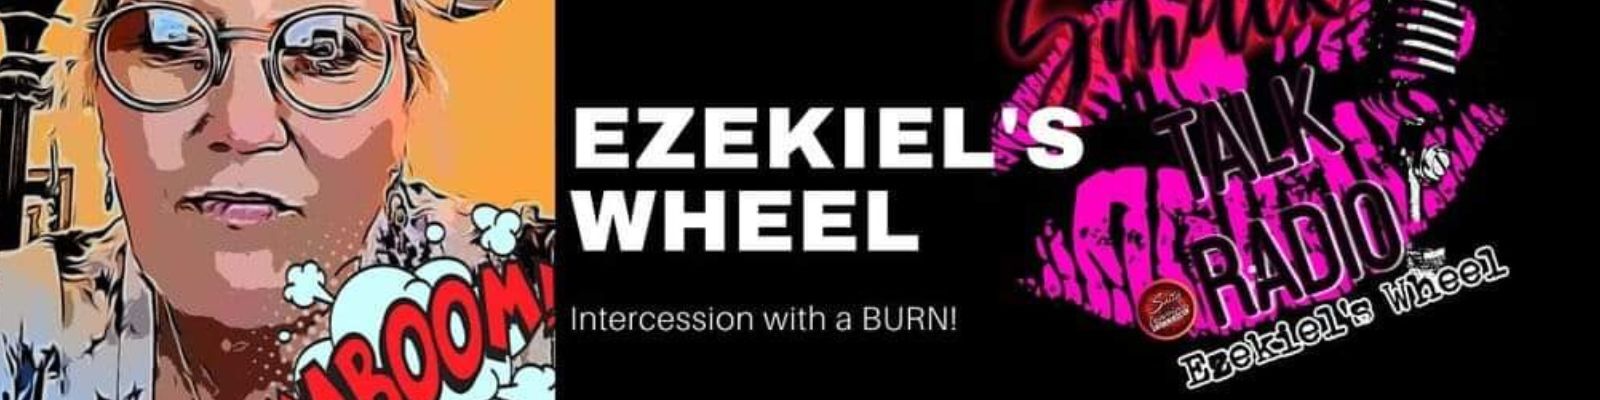 Ezekiels Wheel